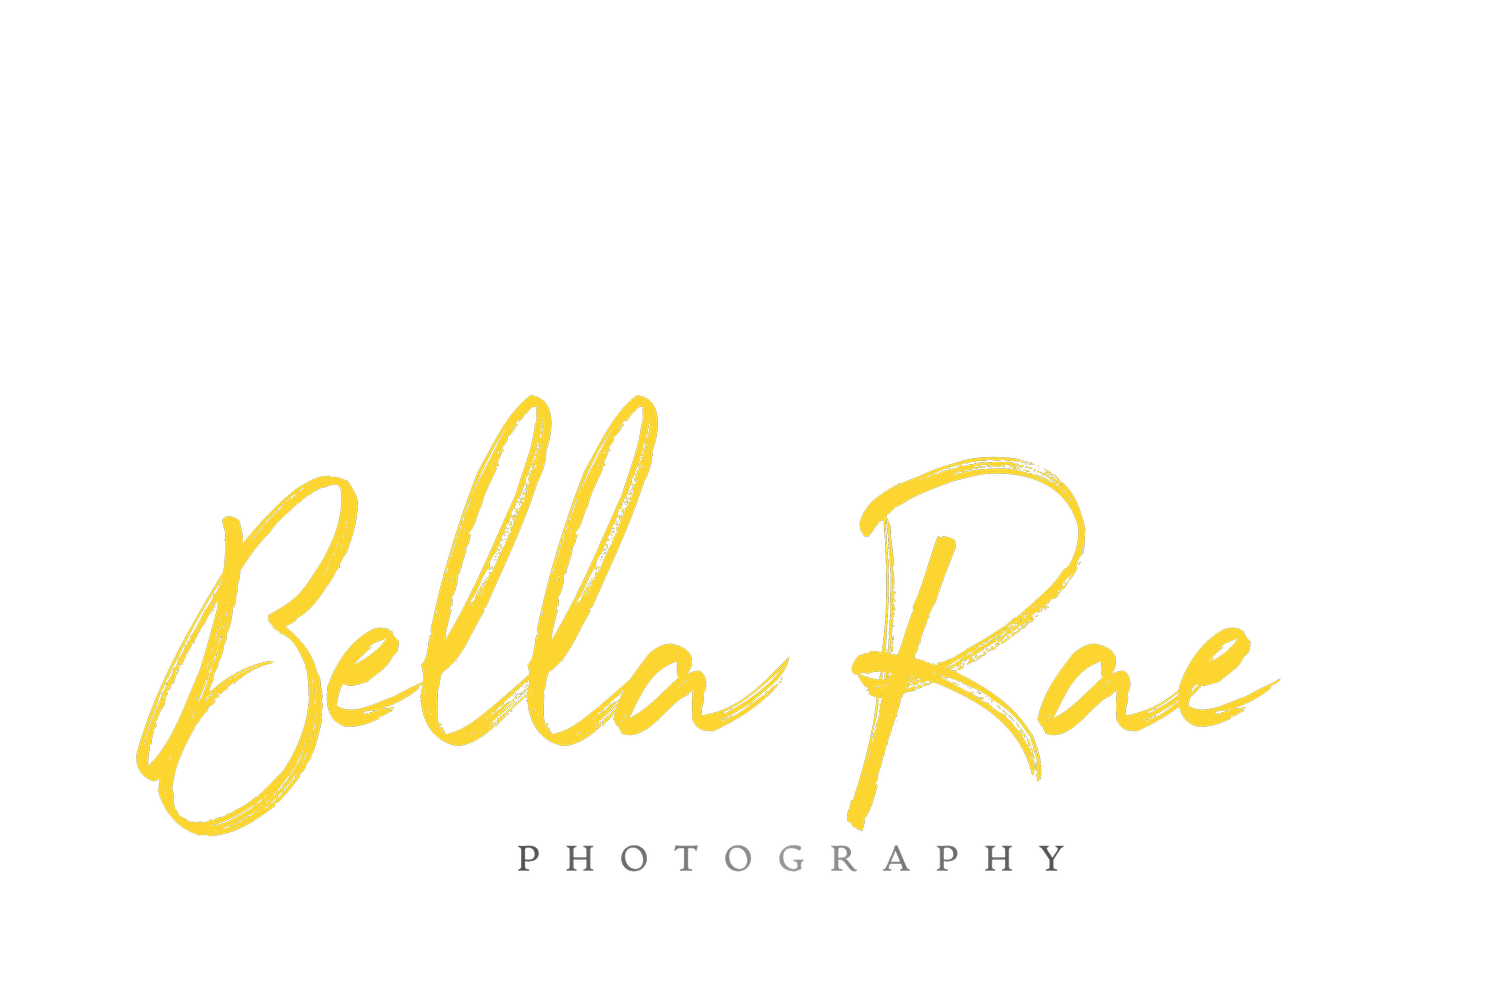 Bella Rae Photography